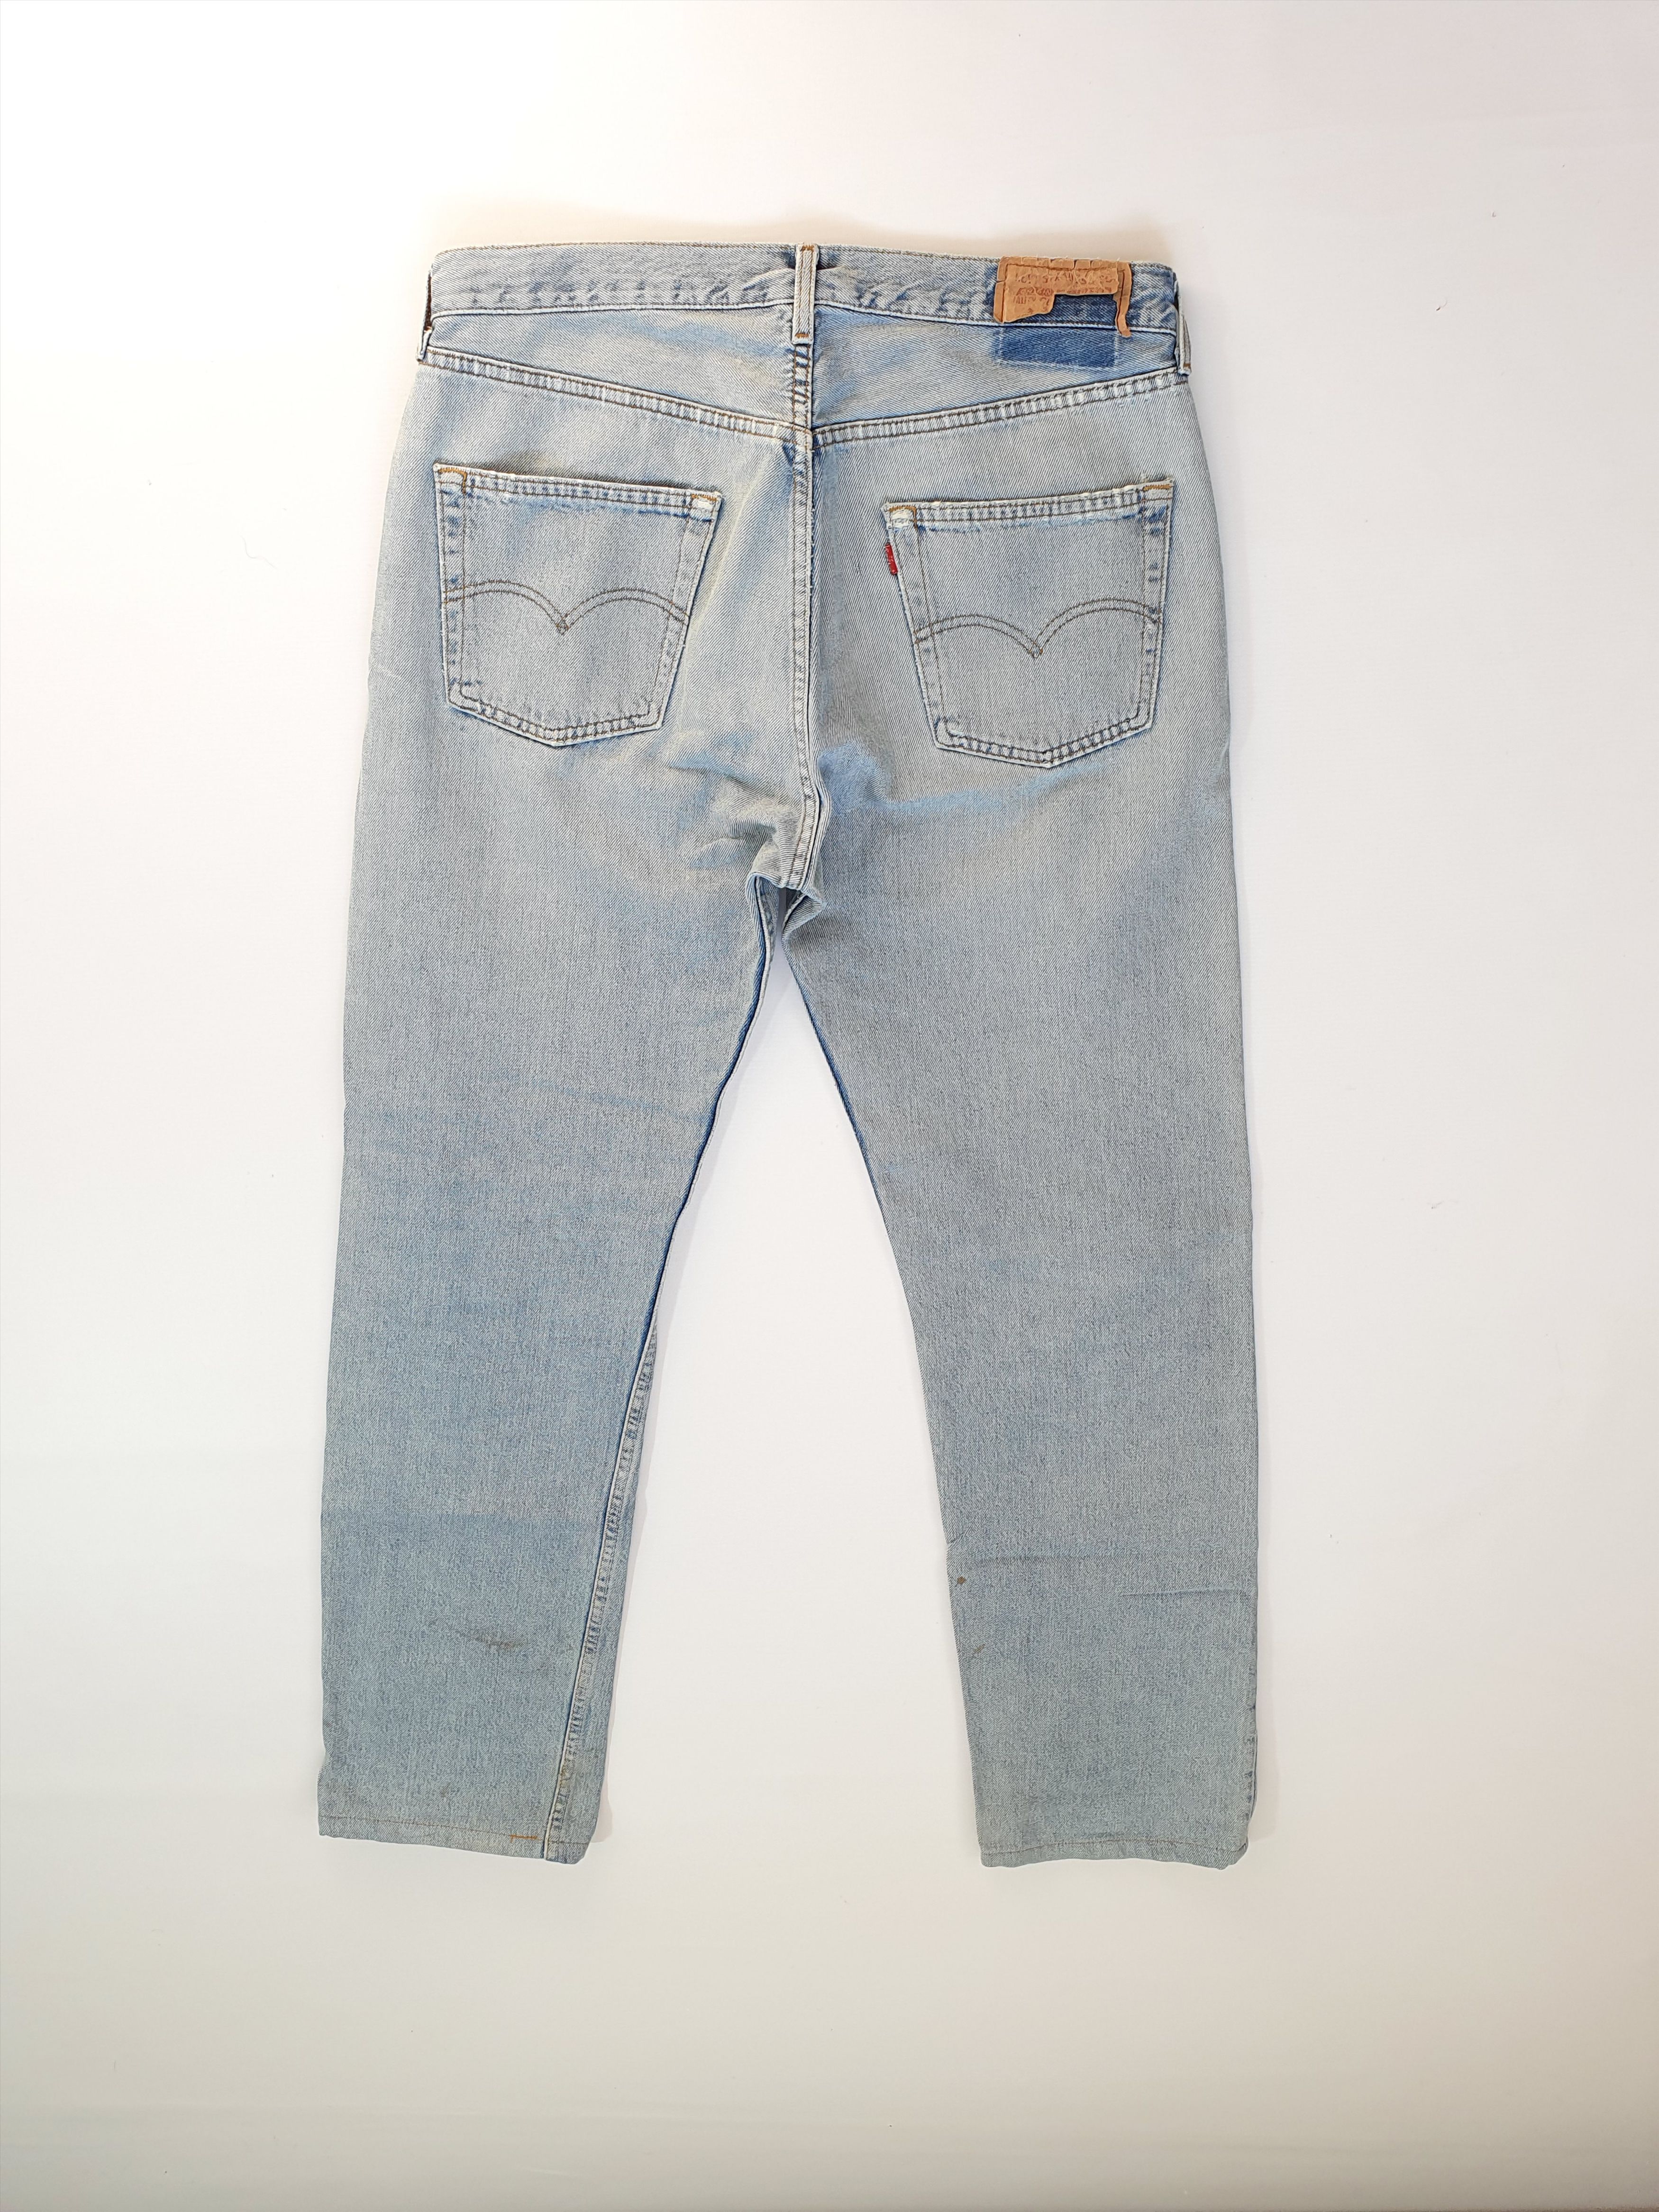 Vintage 1994 Vintage LEVIS 501 Dirty Distressed Jeans Size US 33 - 1 Preview